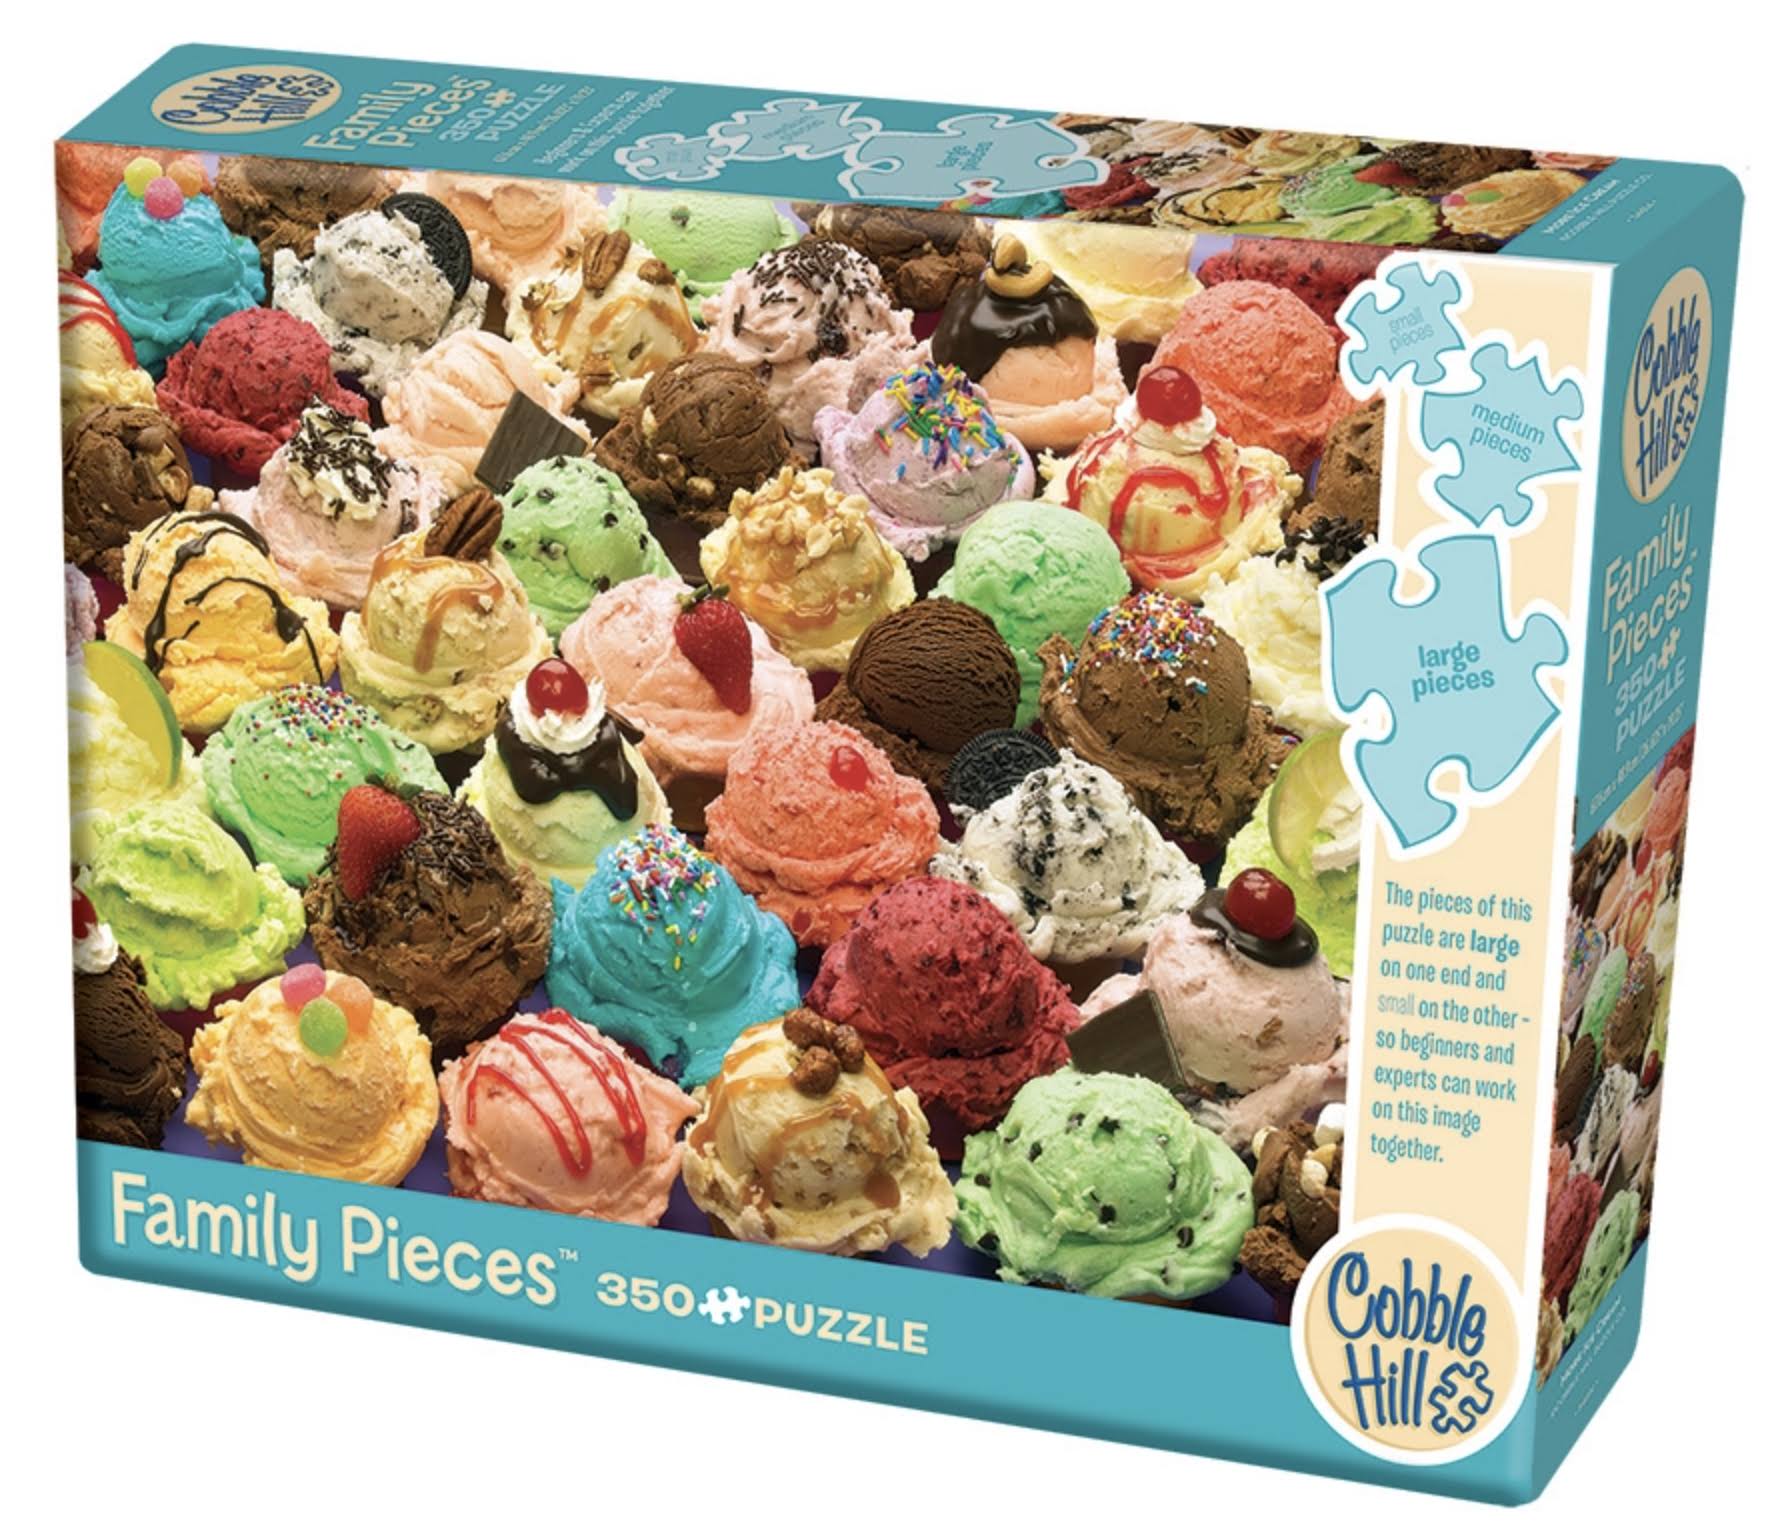 Cobble Hill More Ice Cream Jigsaw Puzzle - 350pcs